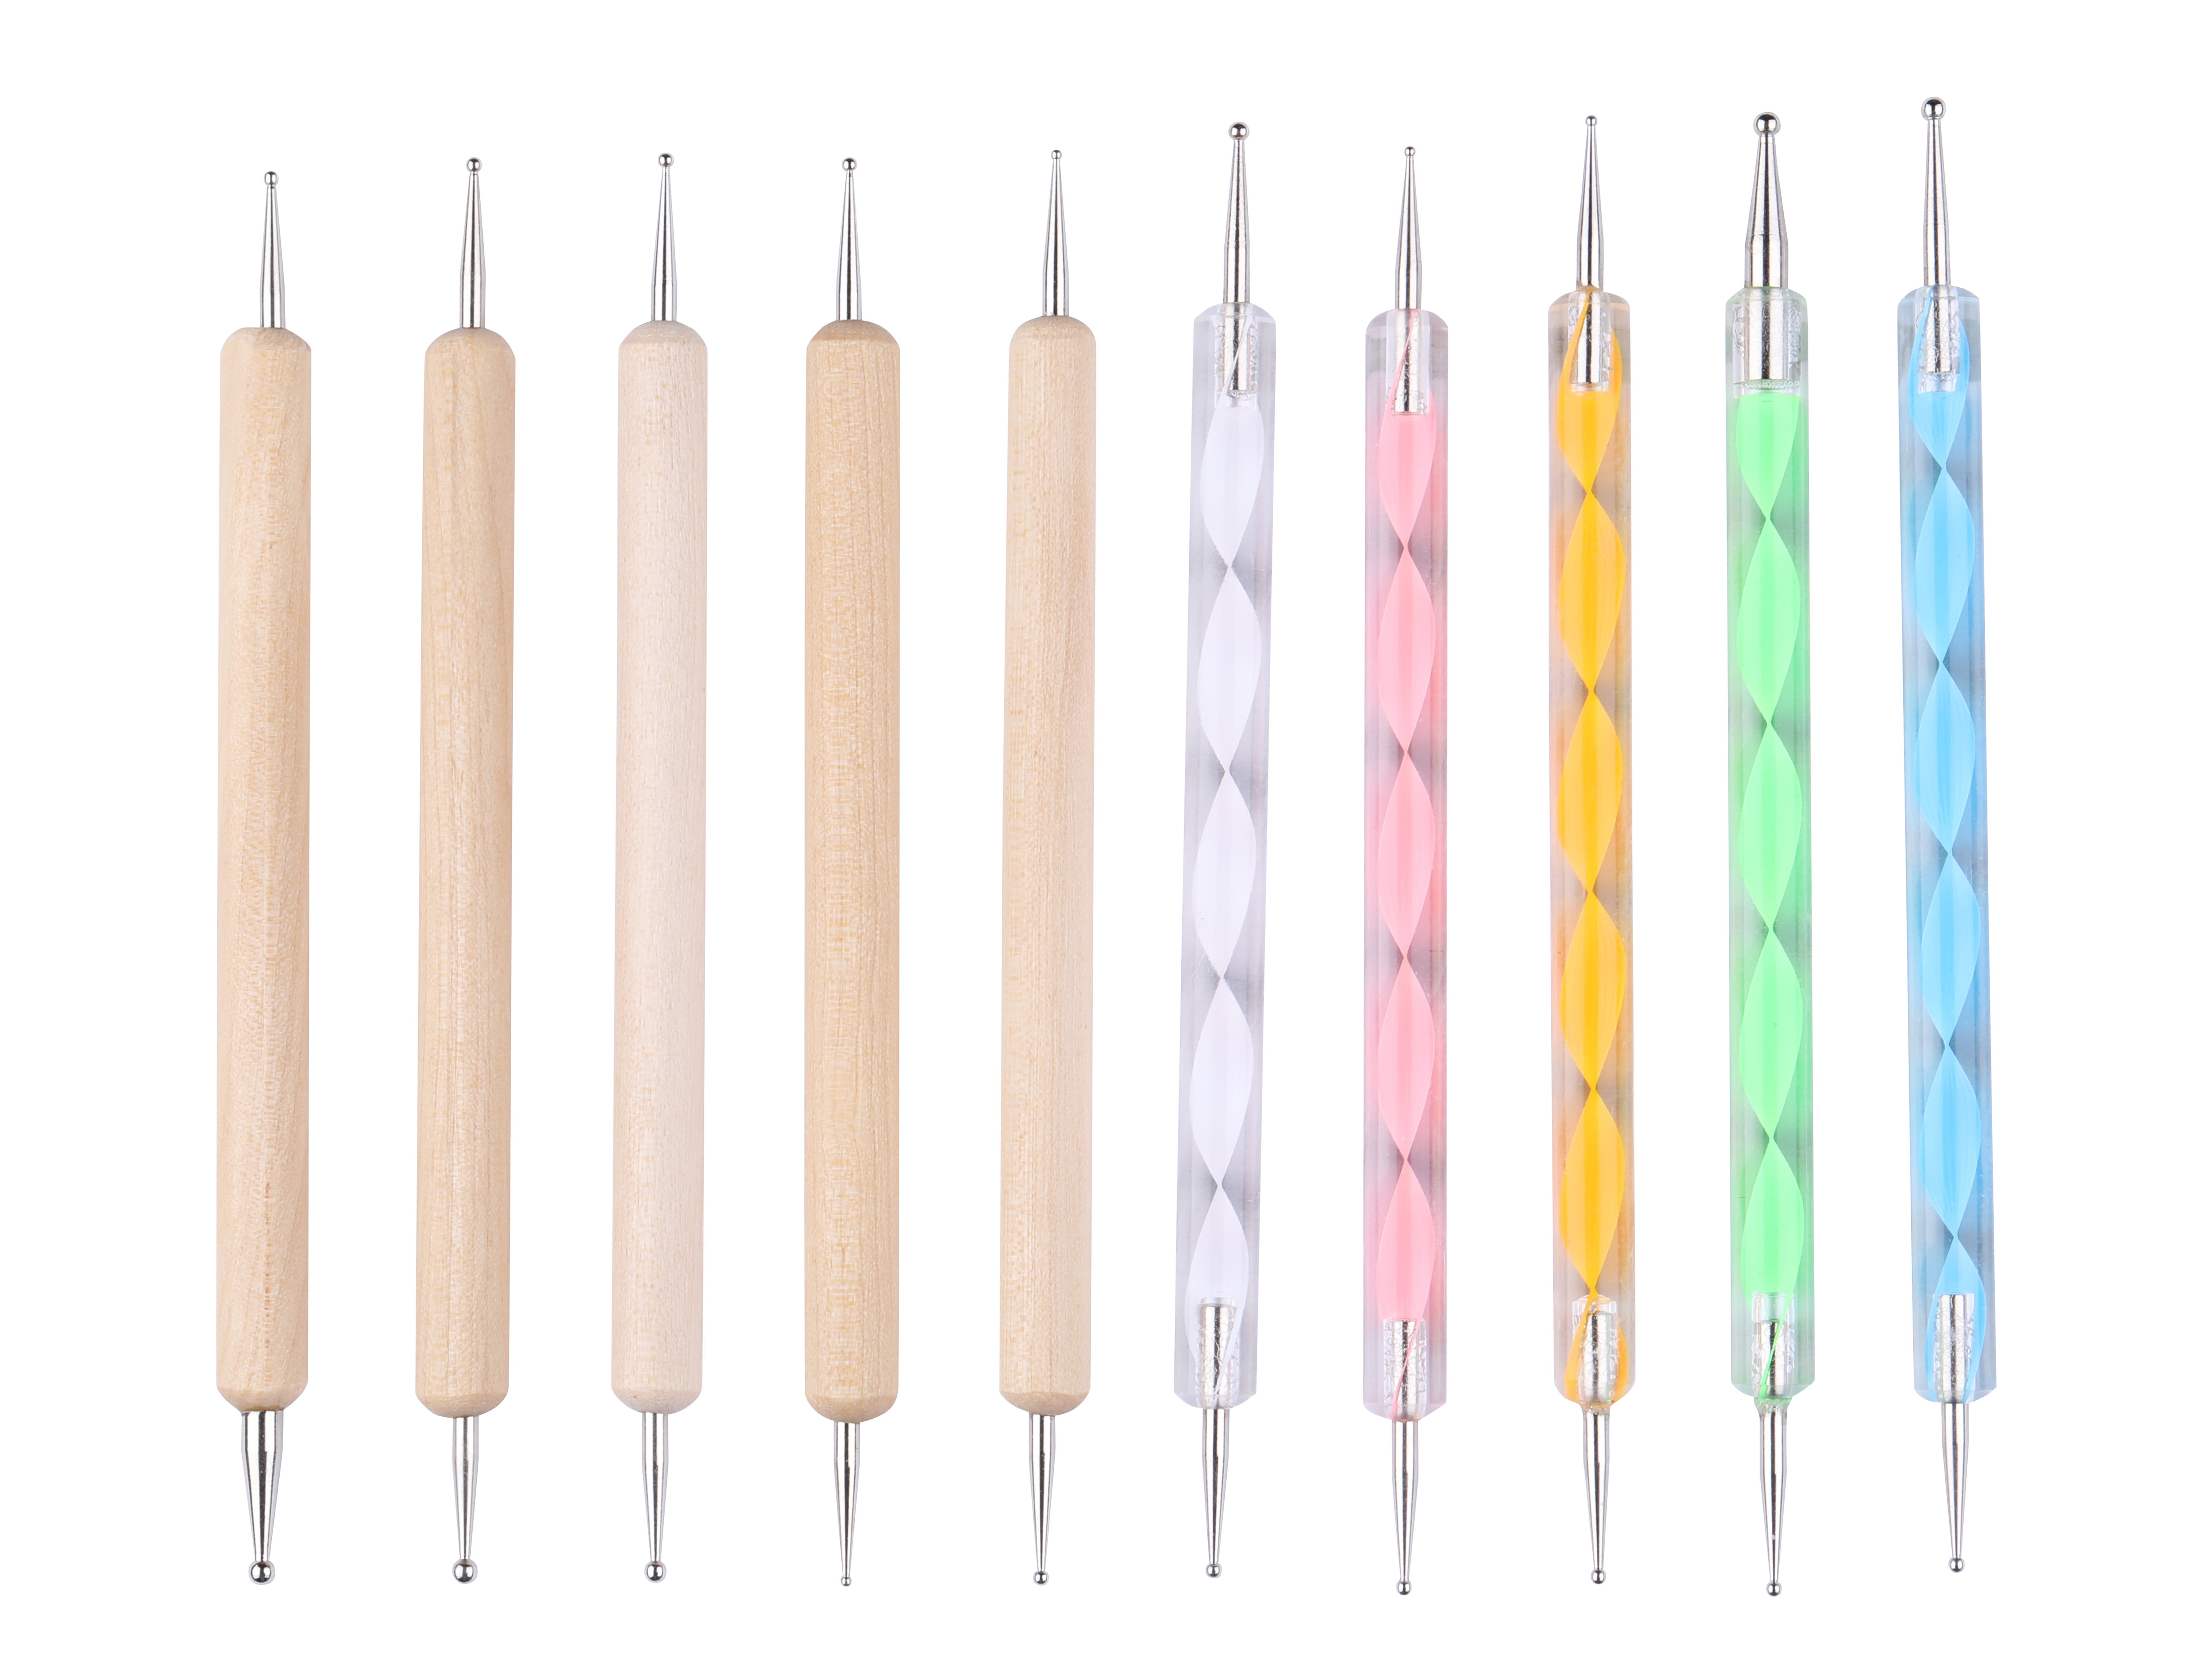 Acrylic Nail Art Kit Tools, EEEkit Nail Design Kit with 2000pcs Nails  Crystals Glitter Rhinestones, Double-End Art Dotting Pen, Nail Art Brushes,  1mm Nail Art Stripe Tapes, Nail Accessories - Walmart.com